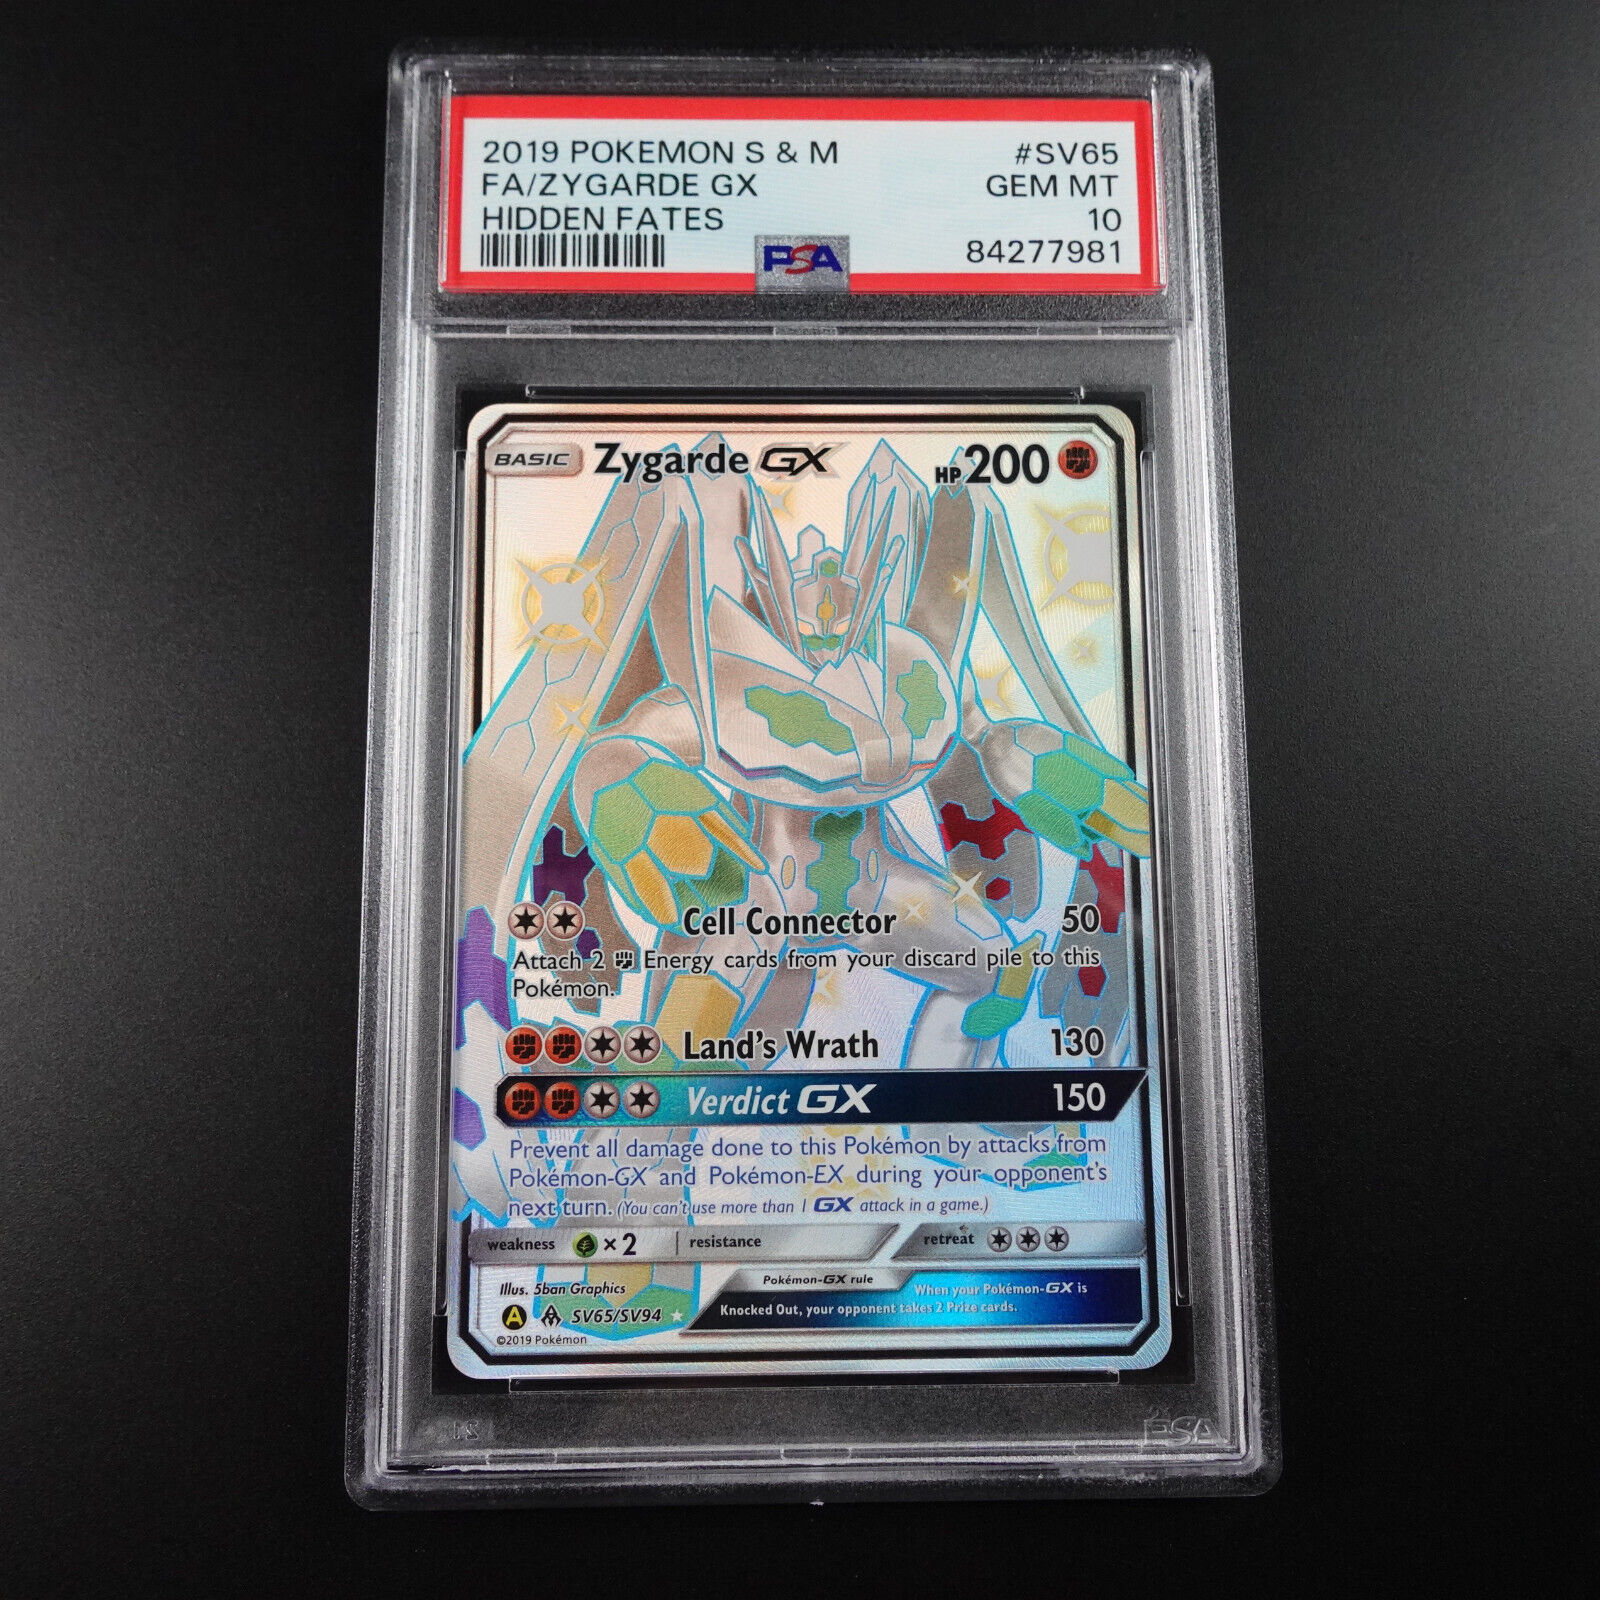 PSA 10 Zygarde GX SV65/SV94 Hidden Fates Holo Graded Pokemon Card